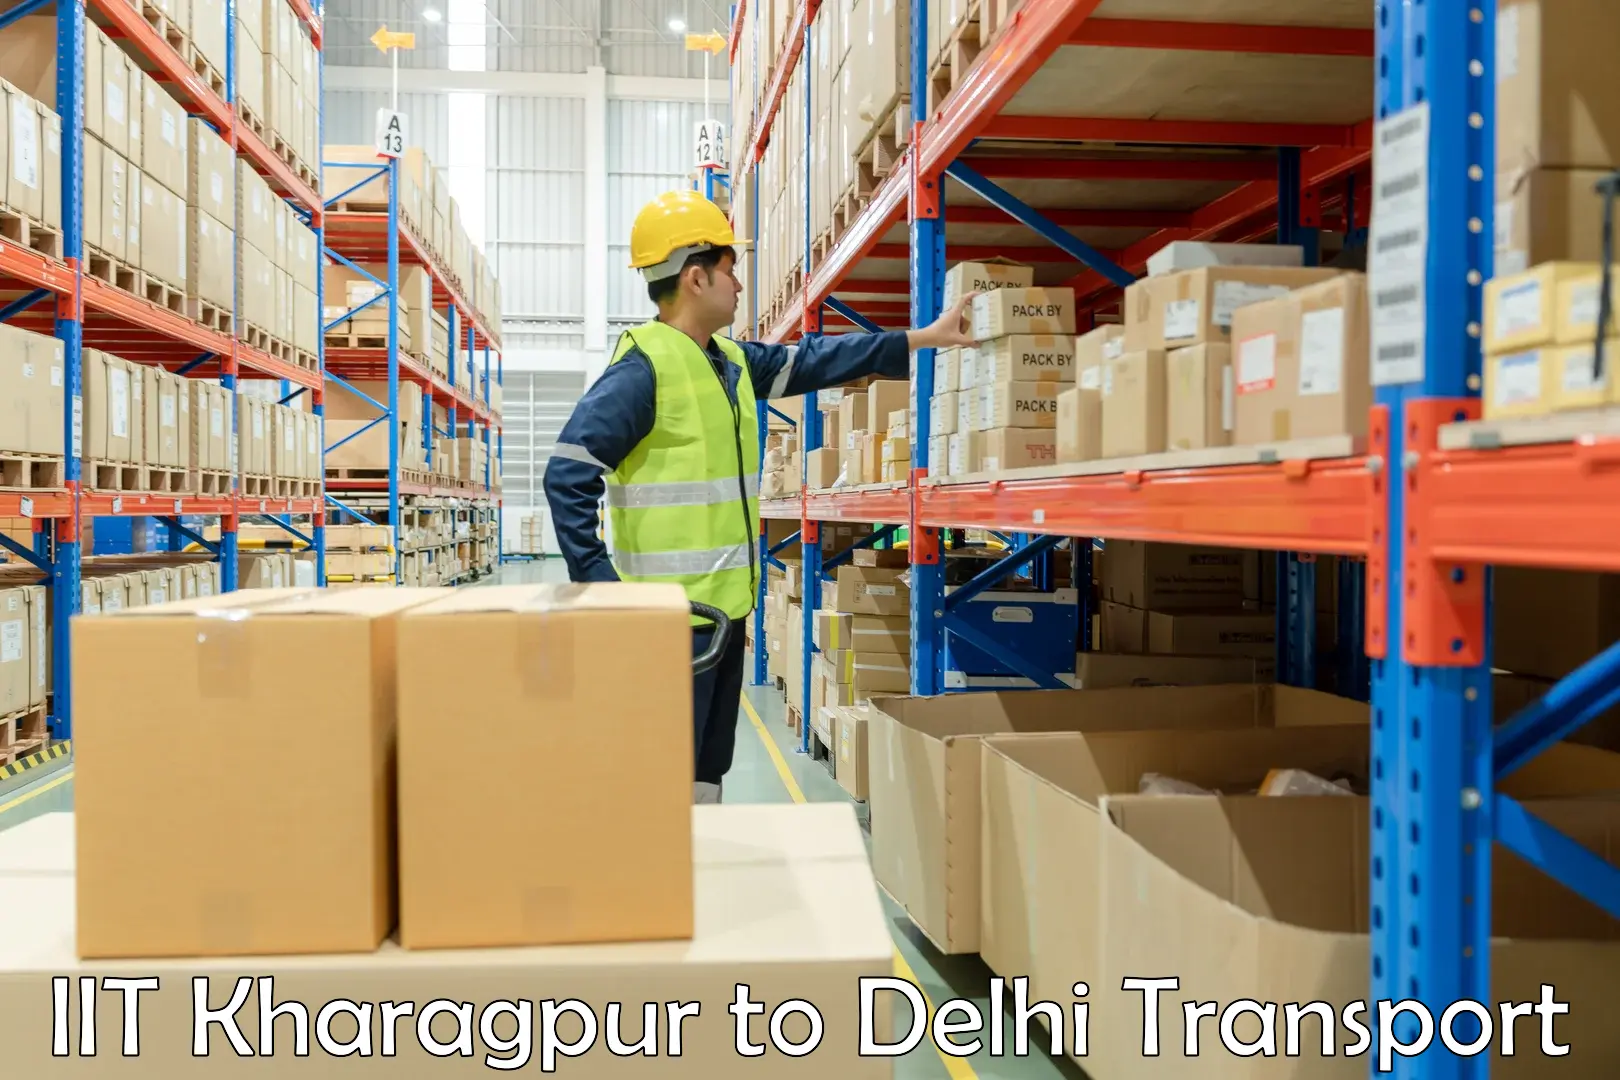 Online transport service IIT Kharagpur to Delhi